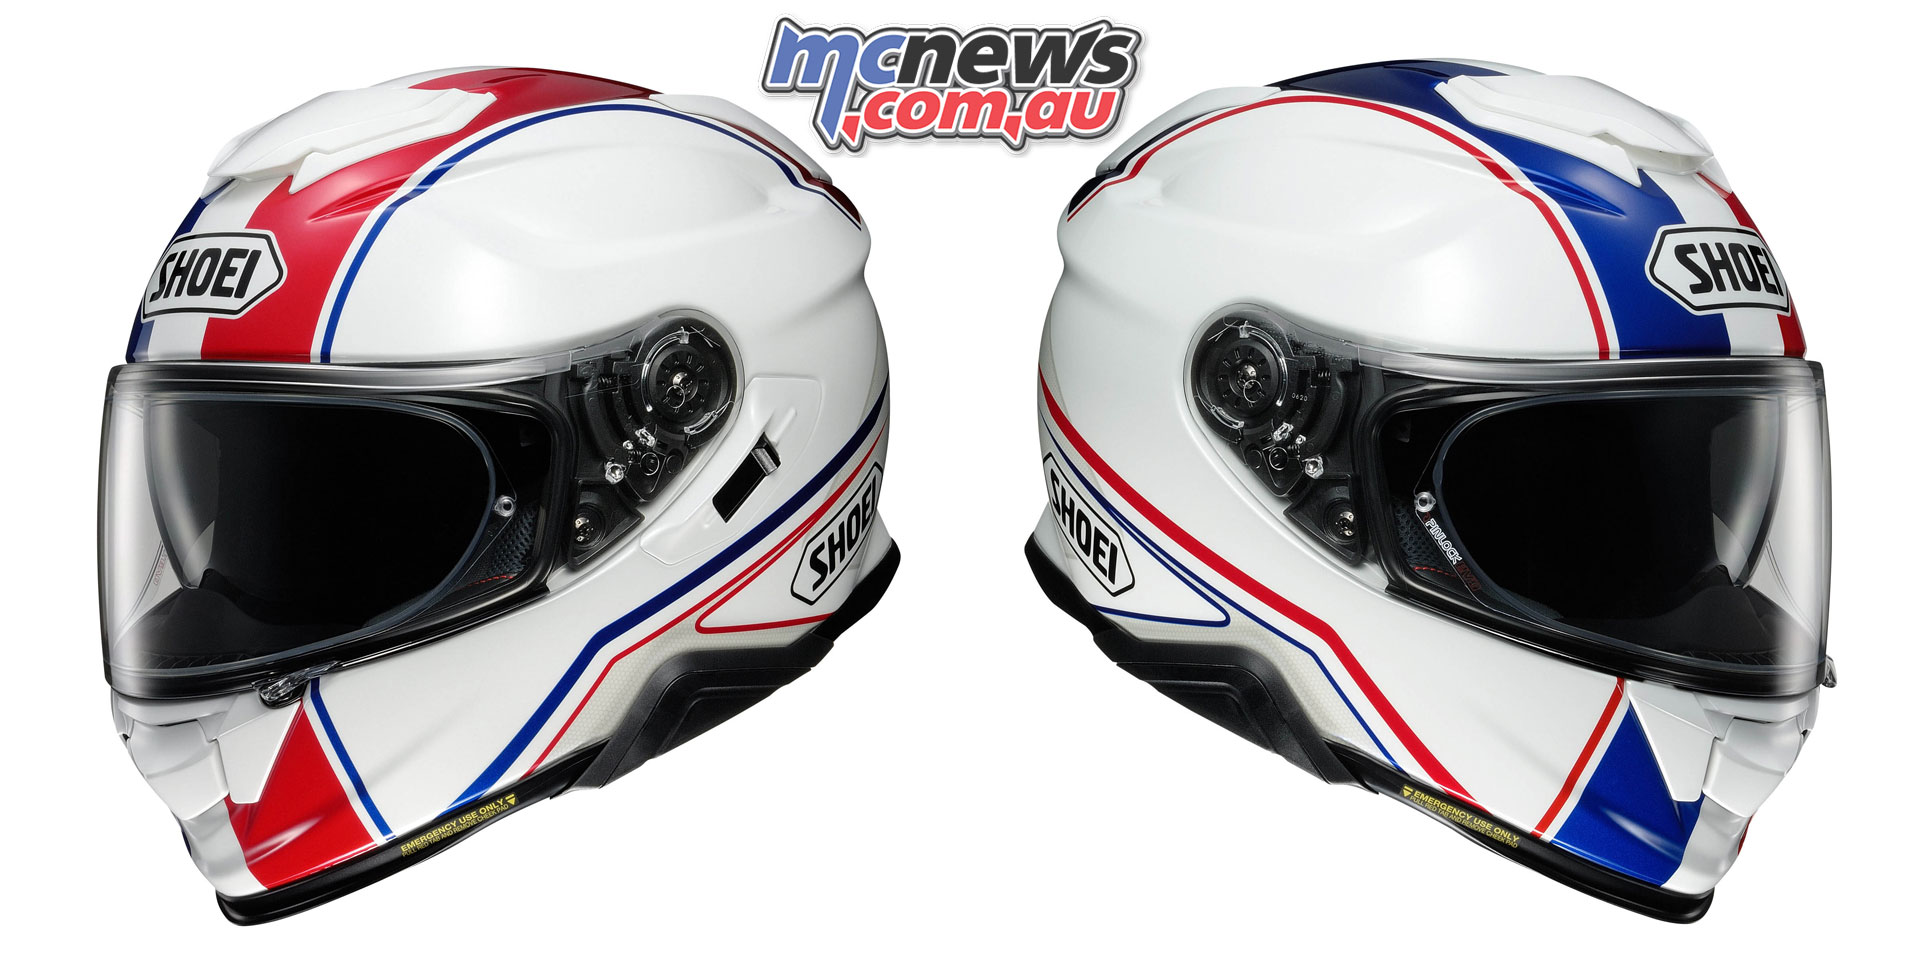 Shoei unveil new 2021 helmet designs MCNews